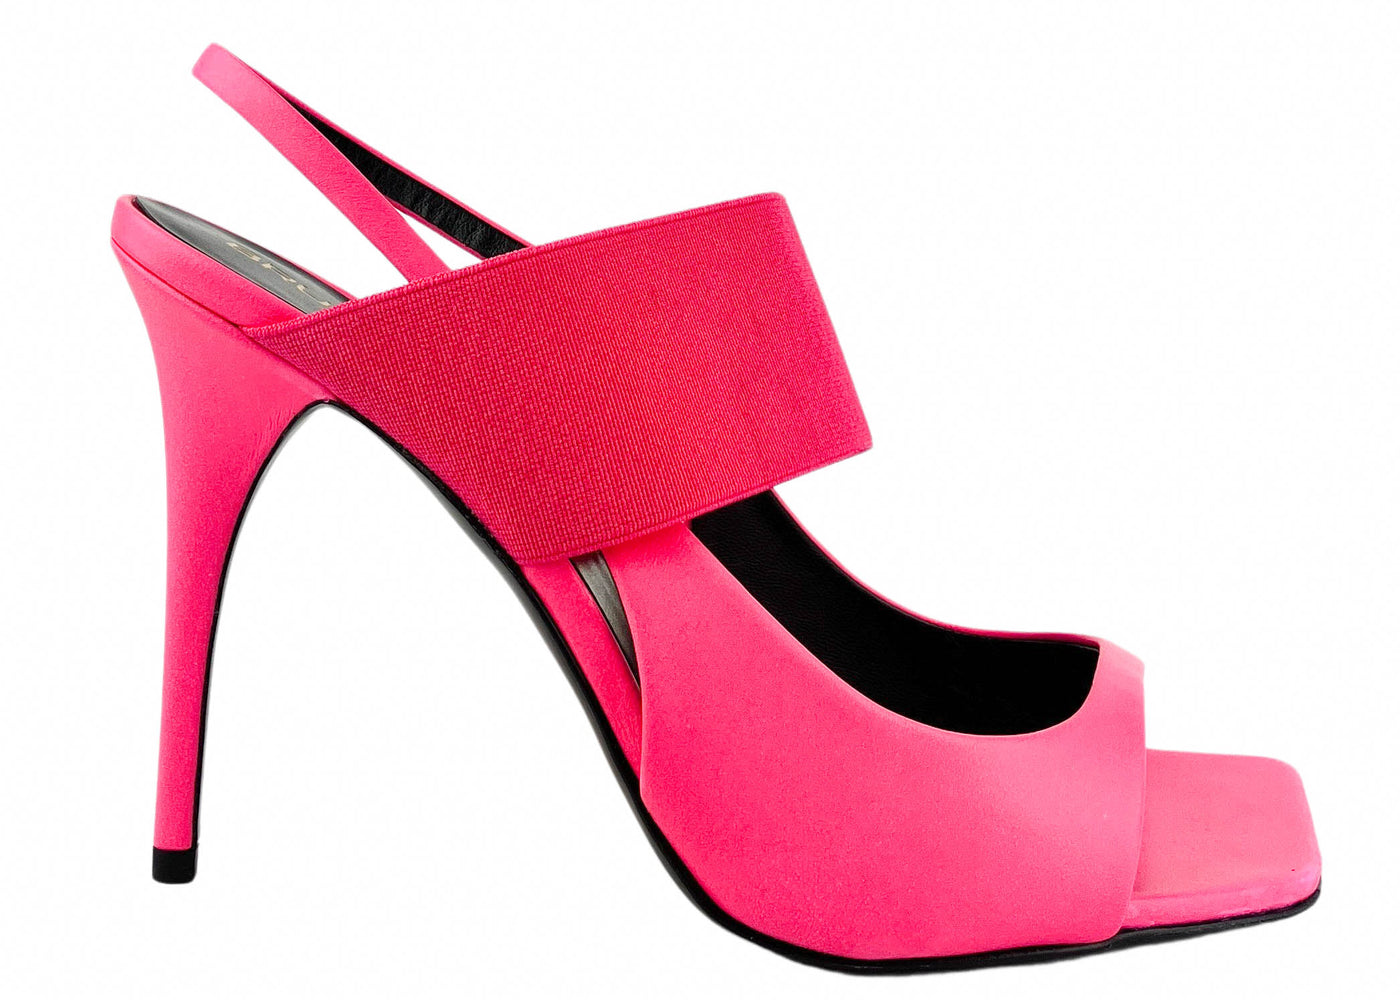 Bruno Frisoni Tonic Slingback Sandals in Hot Pink - Discounts on Bruno Frisoni at UAL